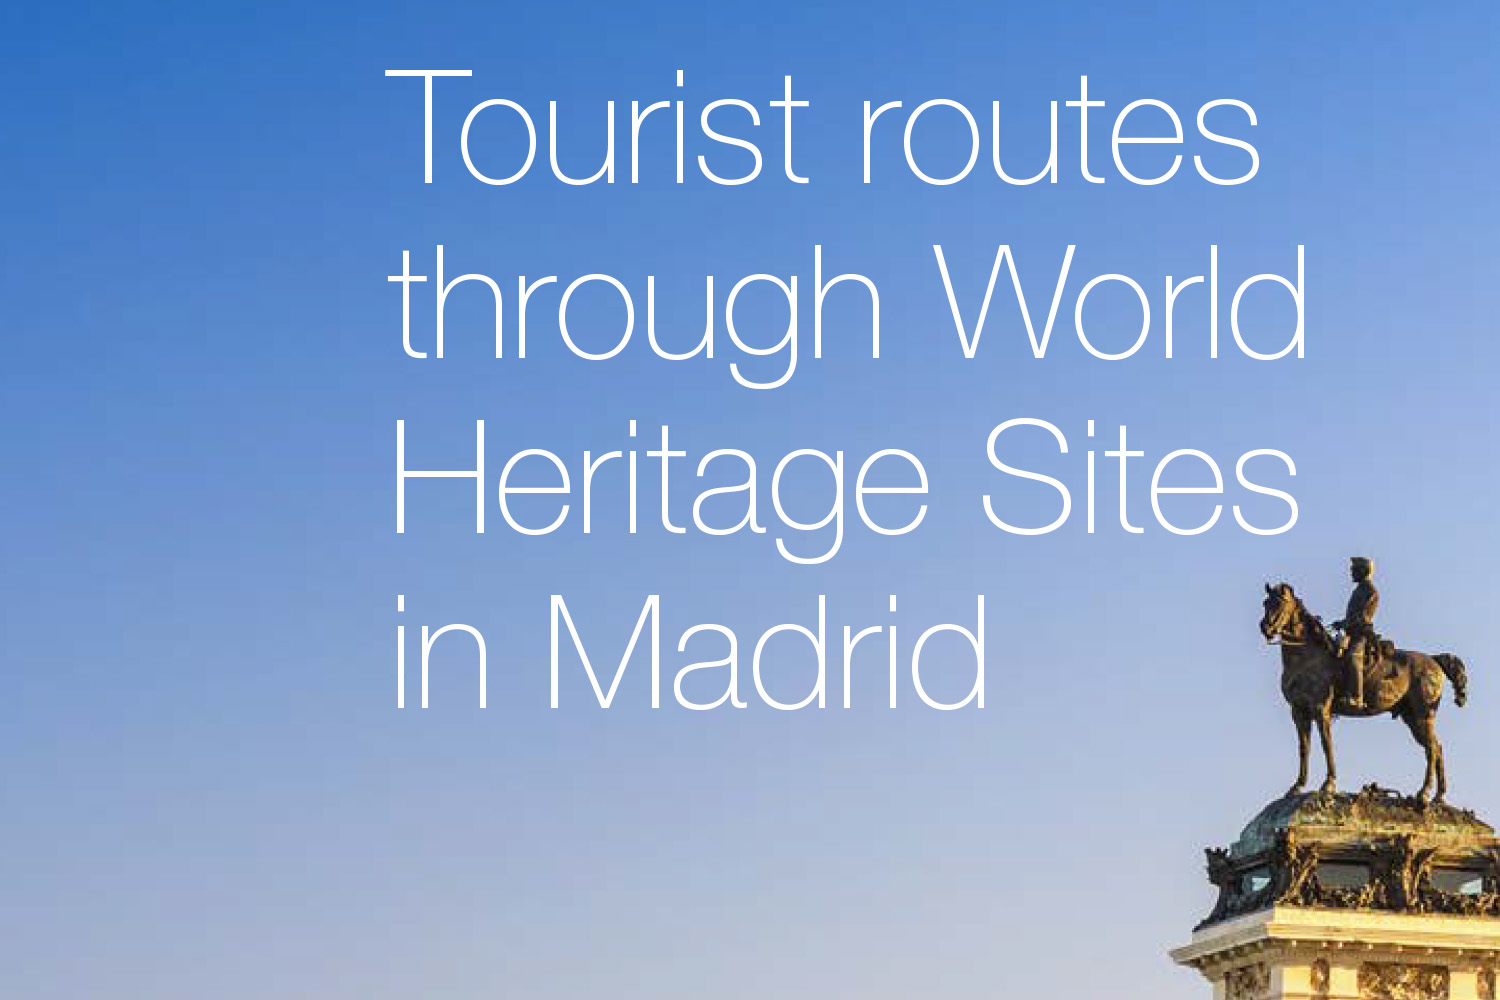 Tourist routes through World Heritage Sites in Madrid